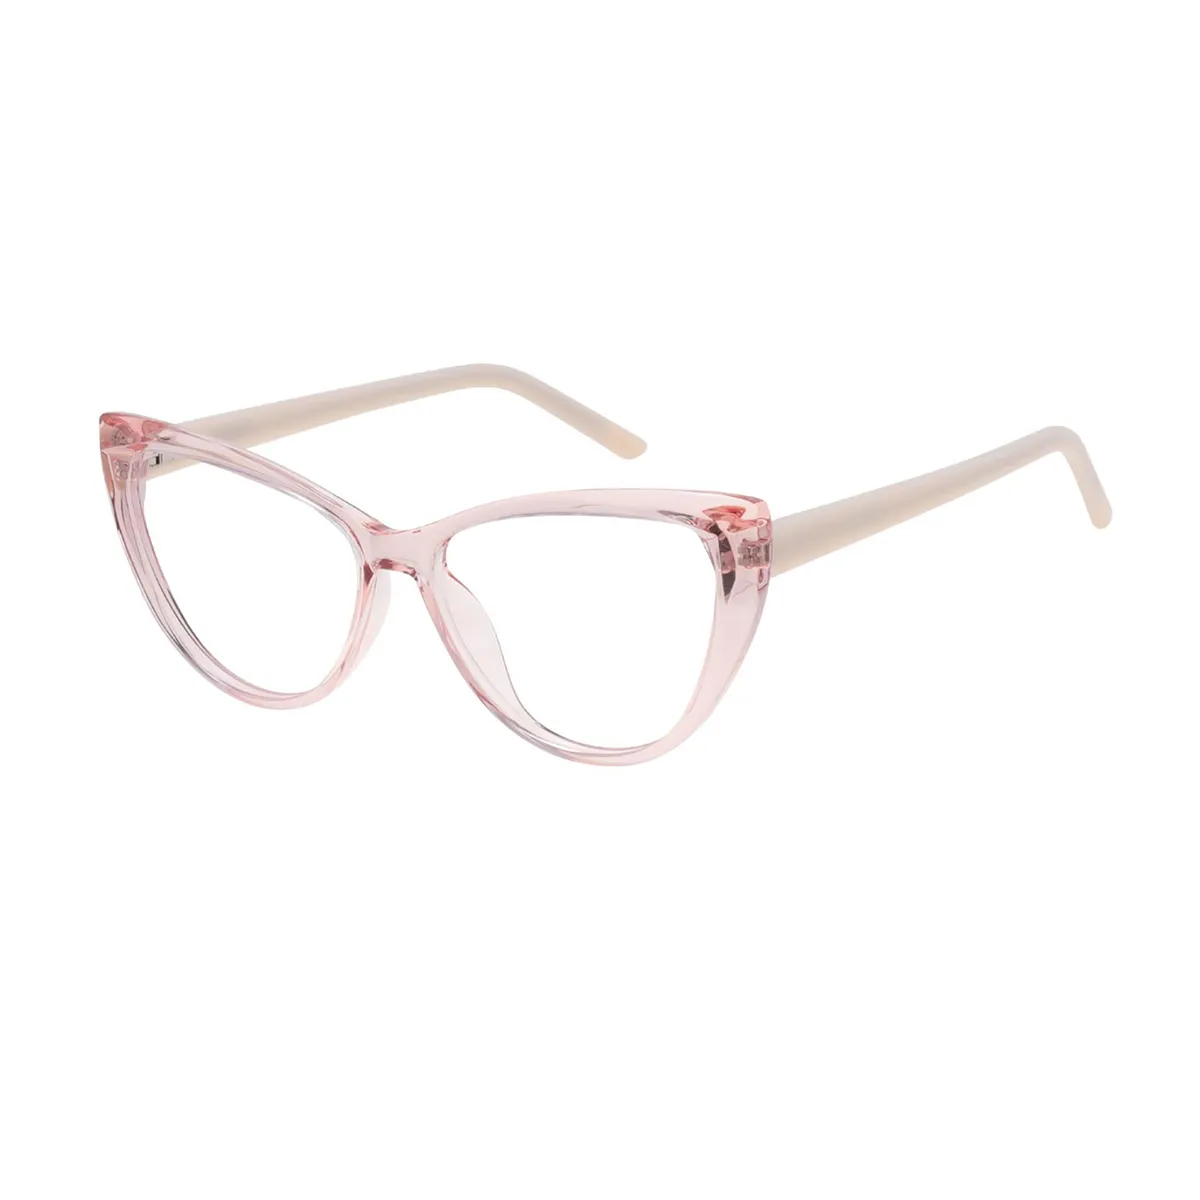 Ayer - Cat-eye Transparent-pink Glasses for Women - EFE